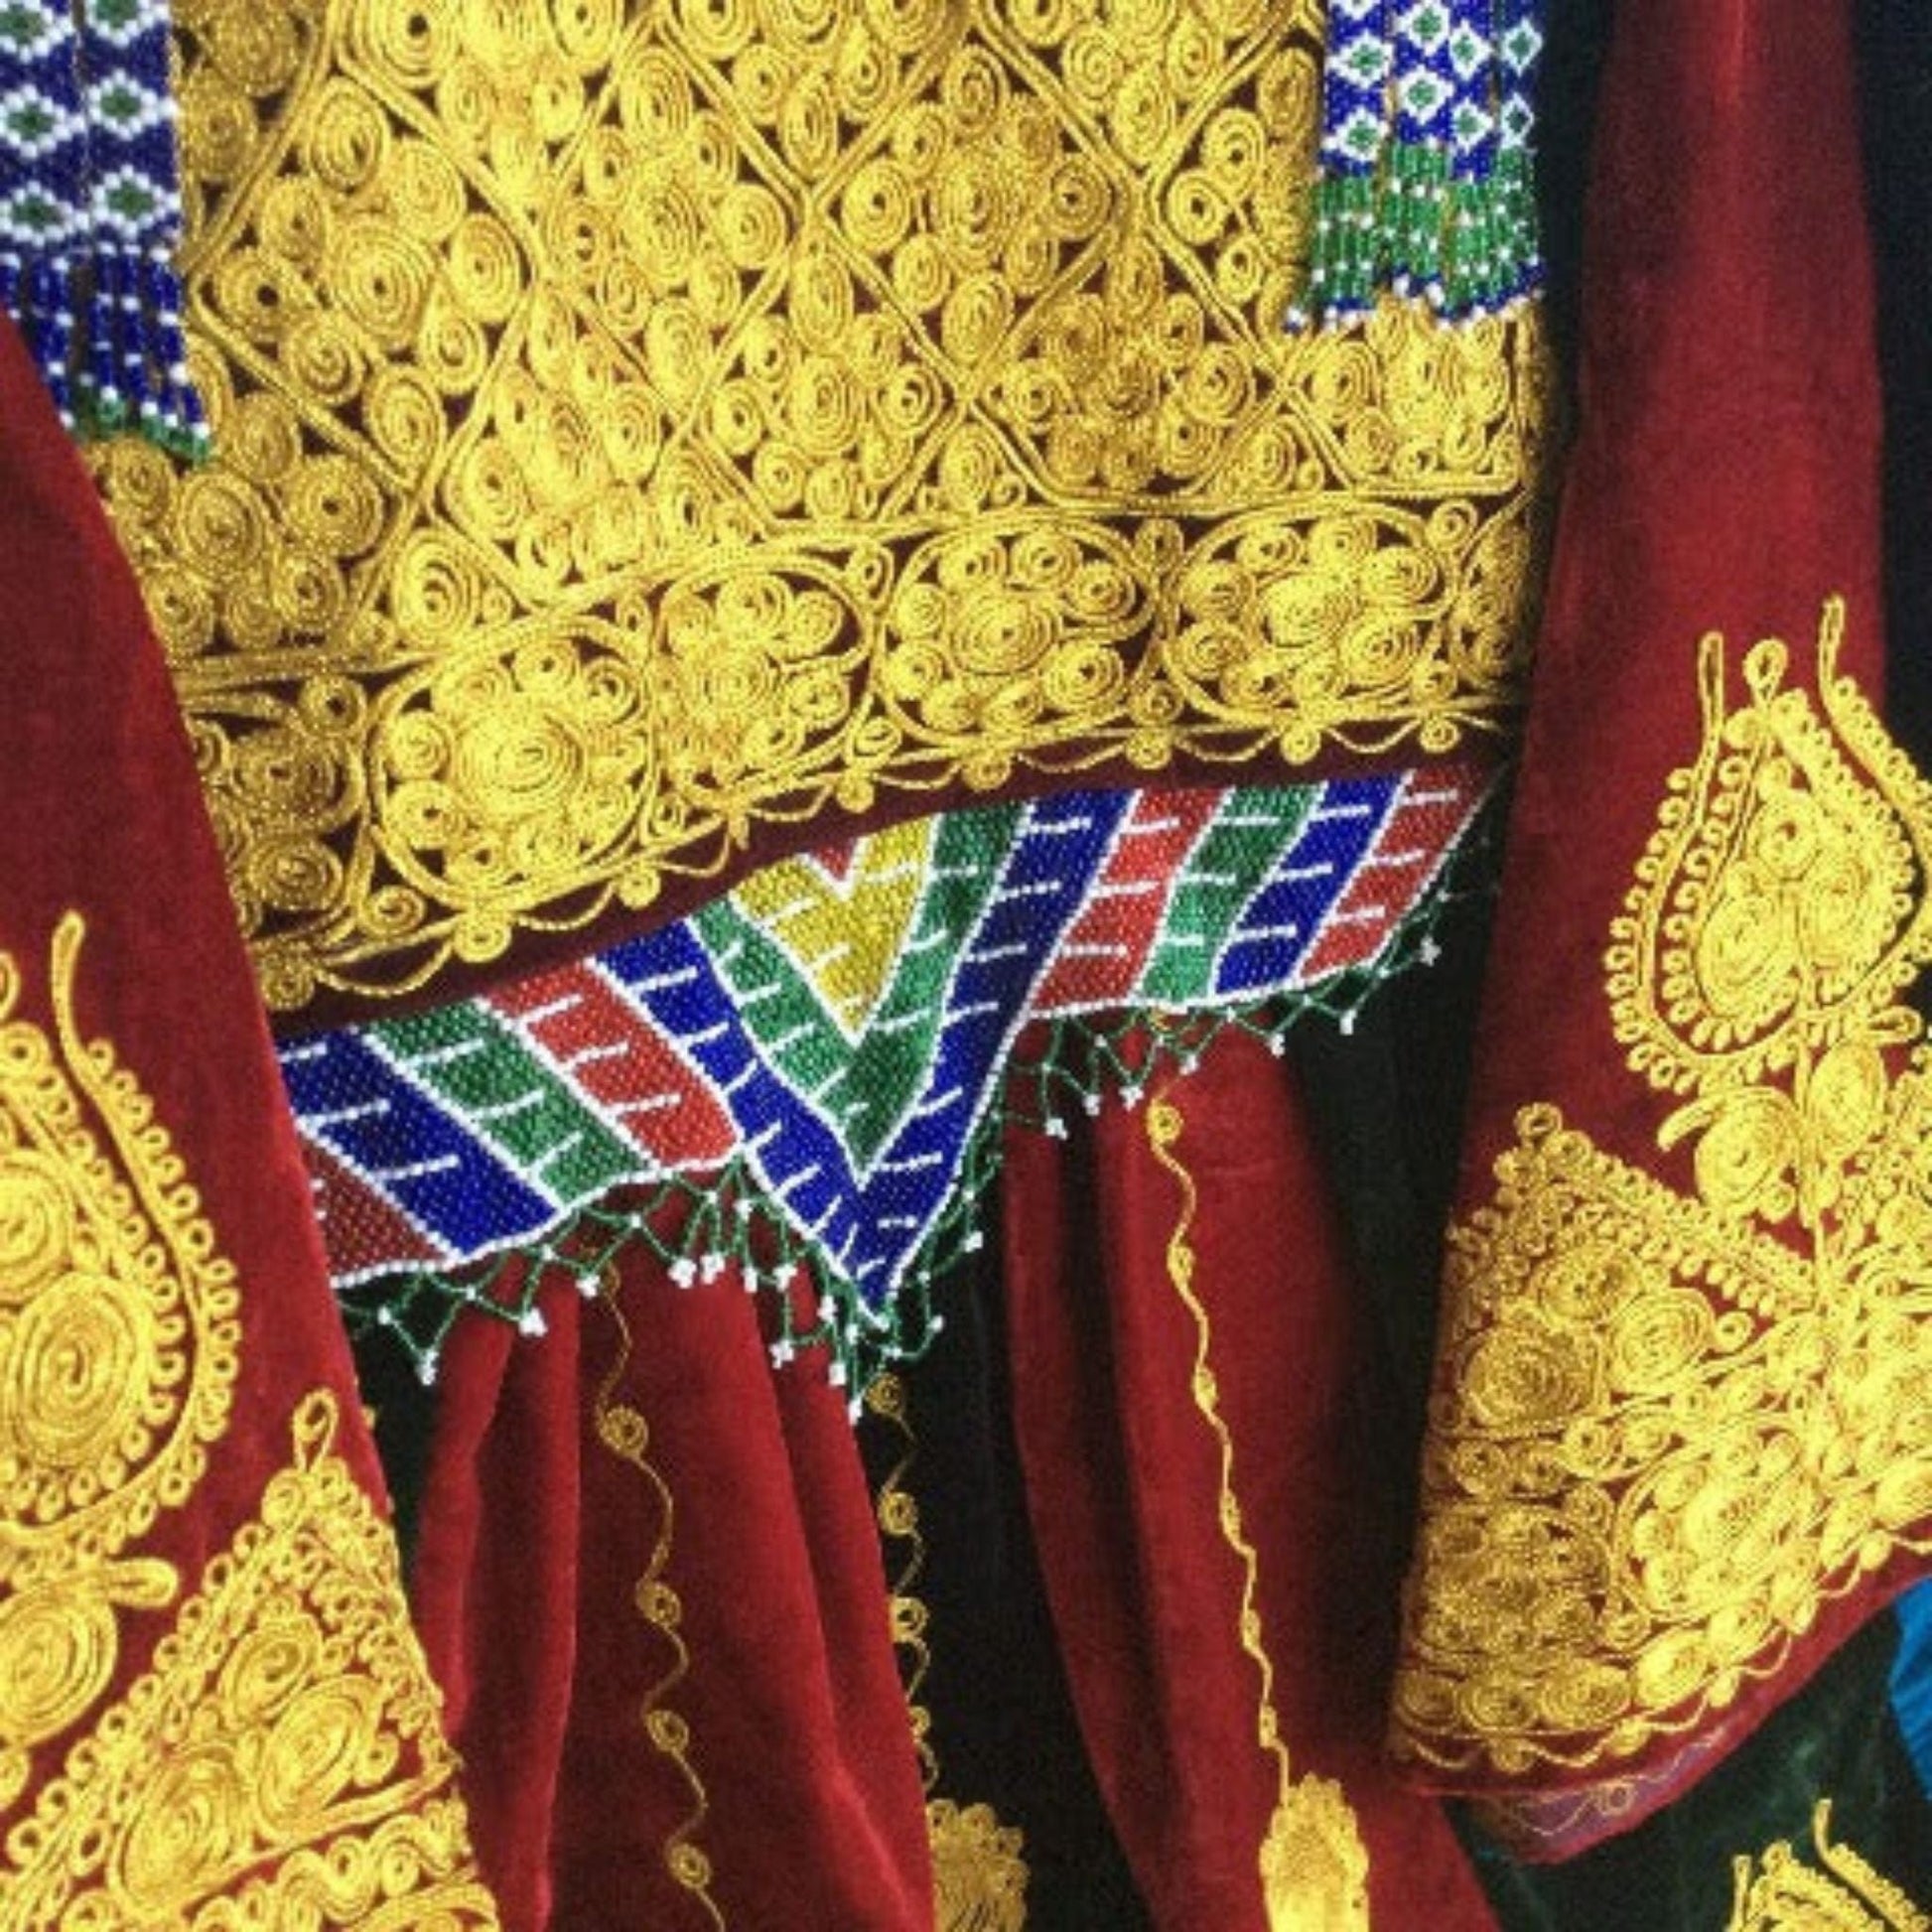 Tribal Ethnic Kuchi Dress Medium / Multi / Vintage 1990s